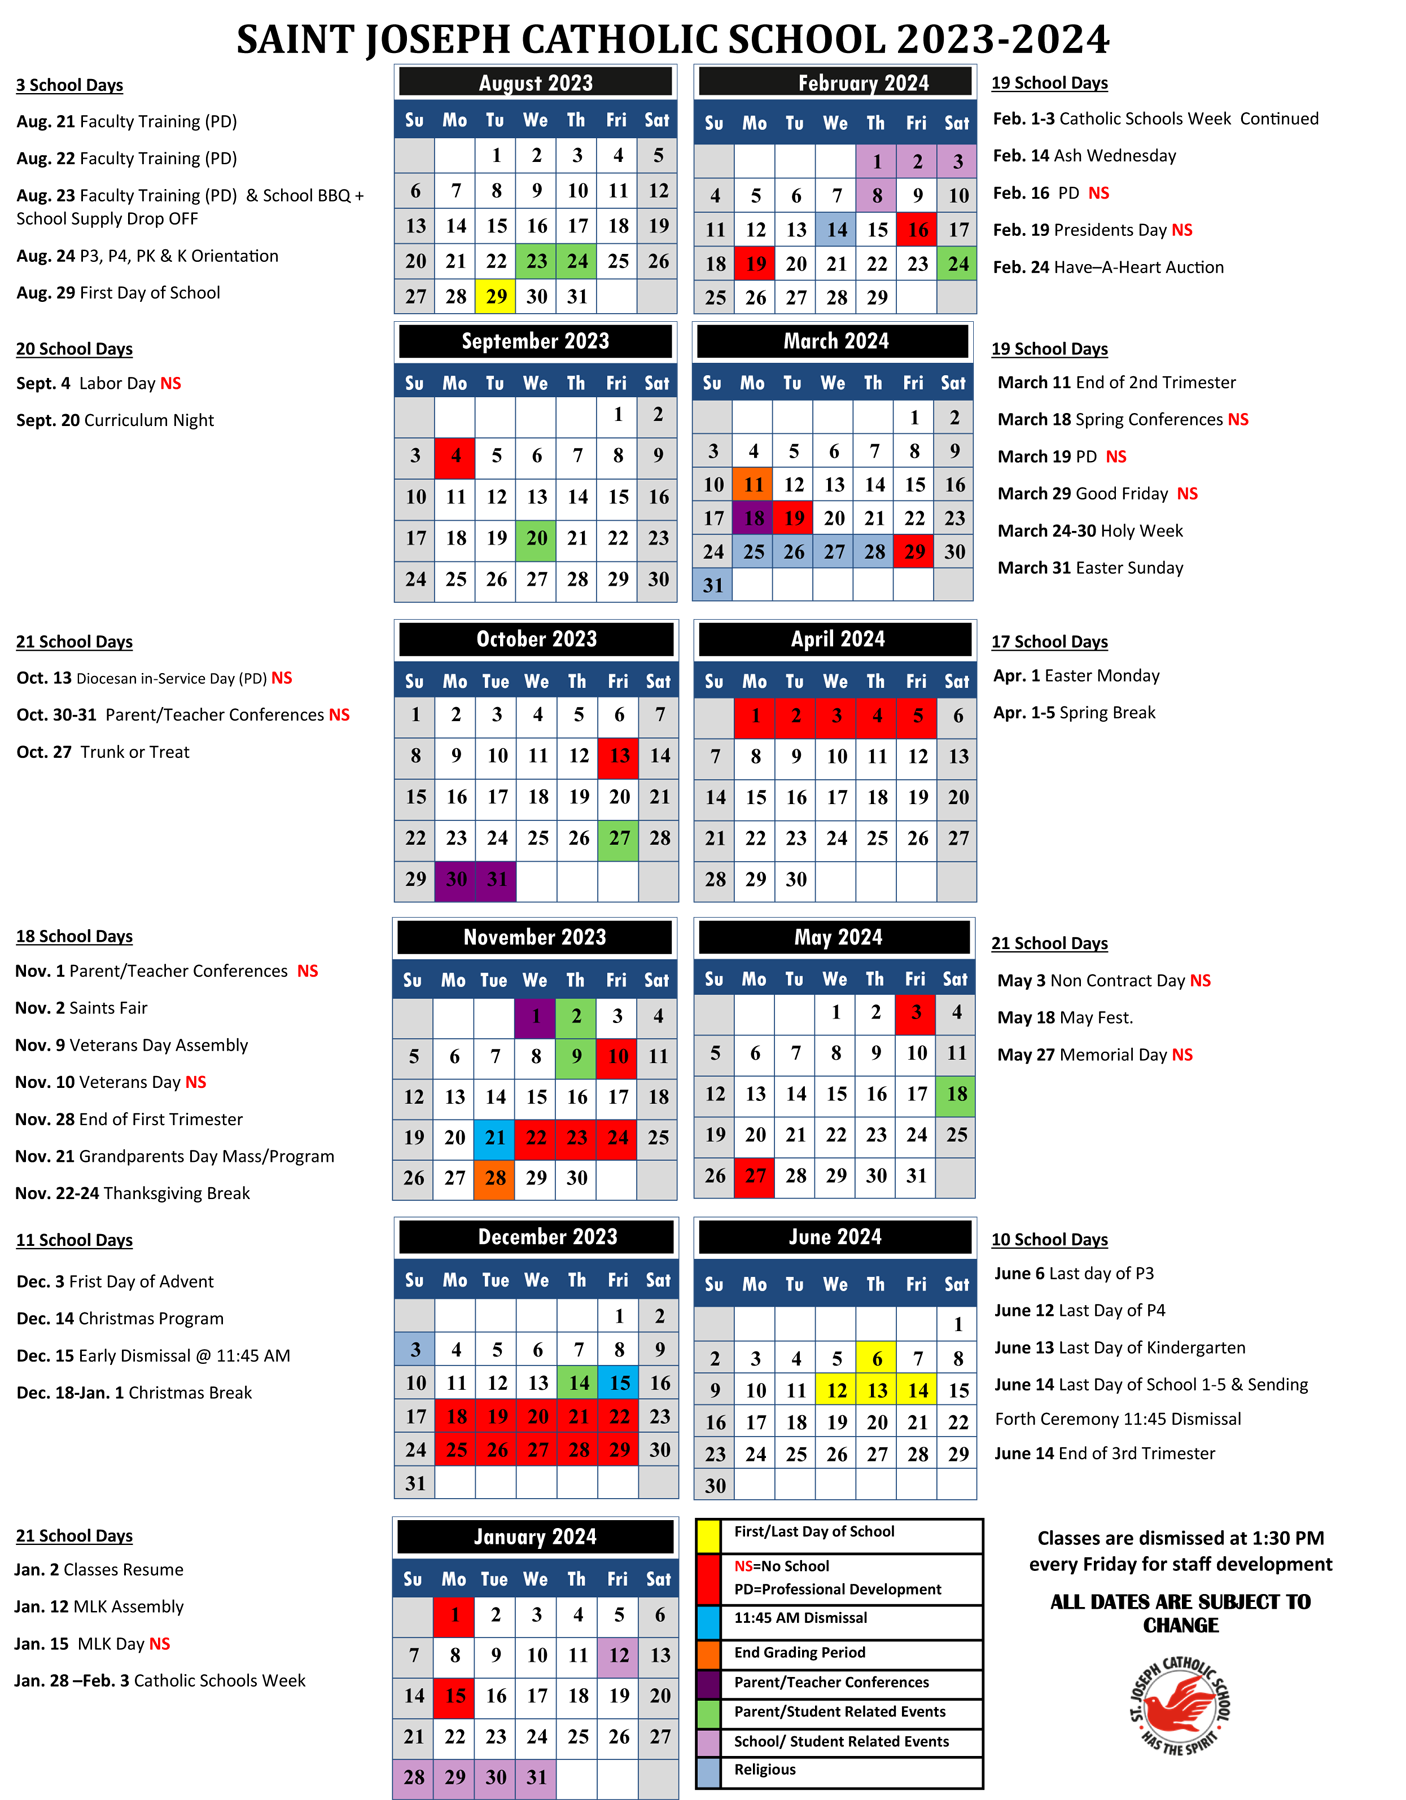 2023 School Calendar